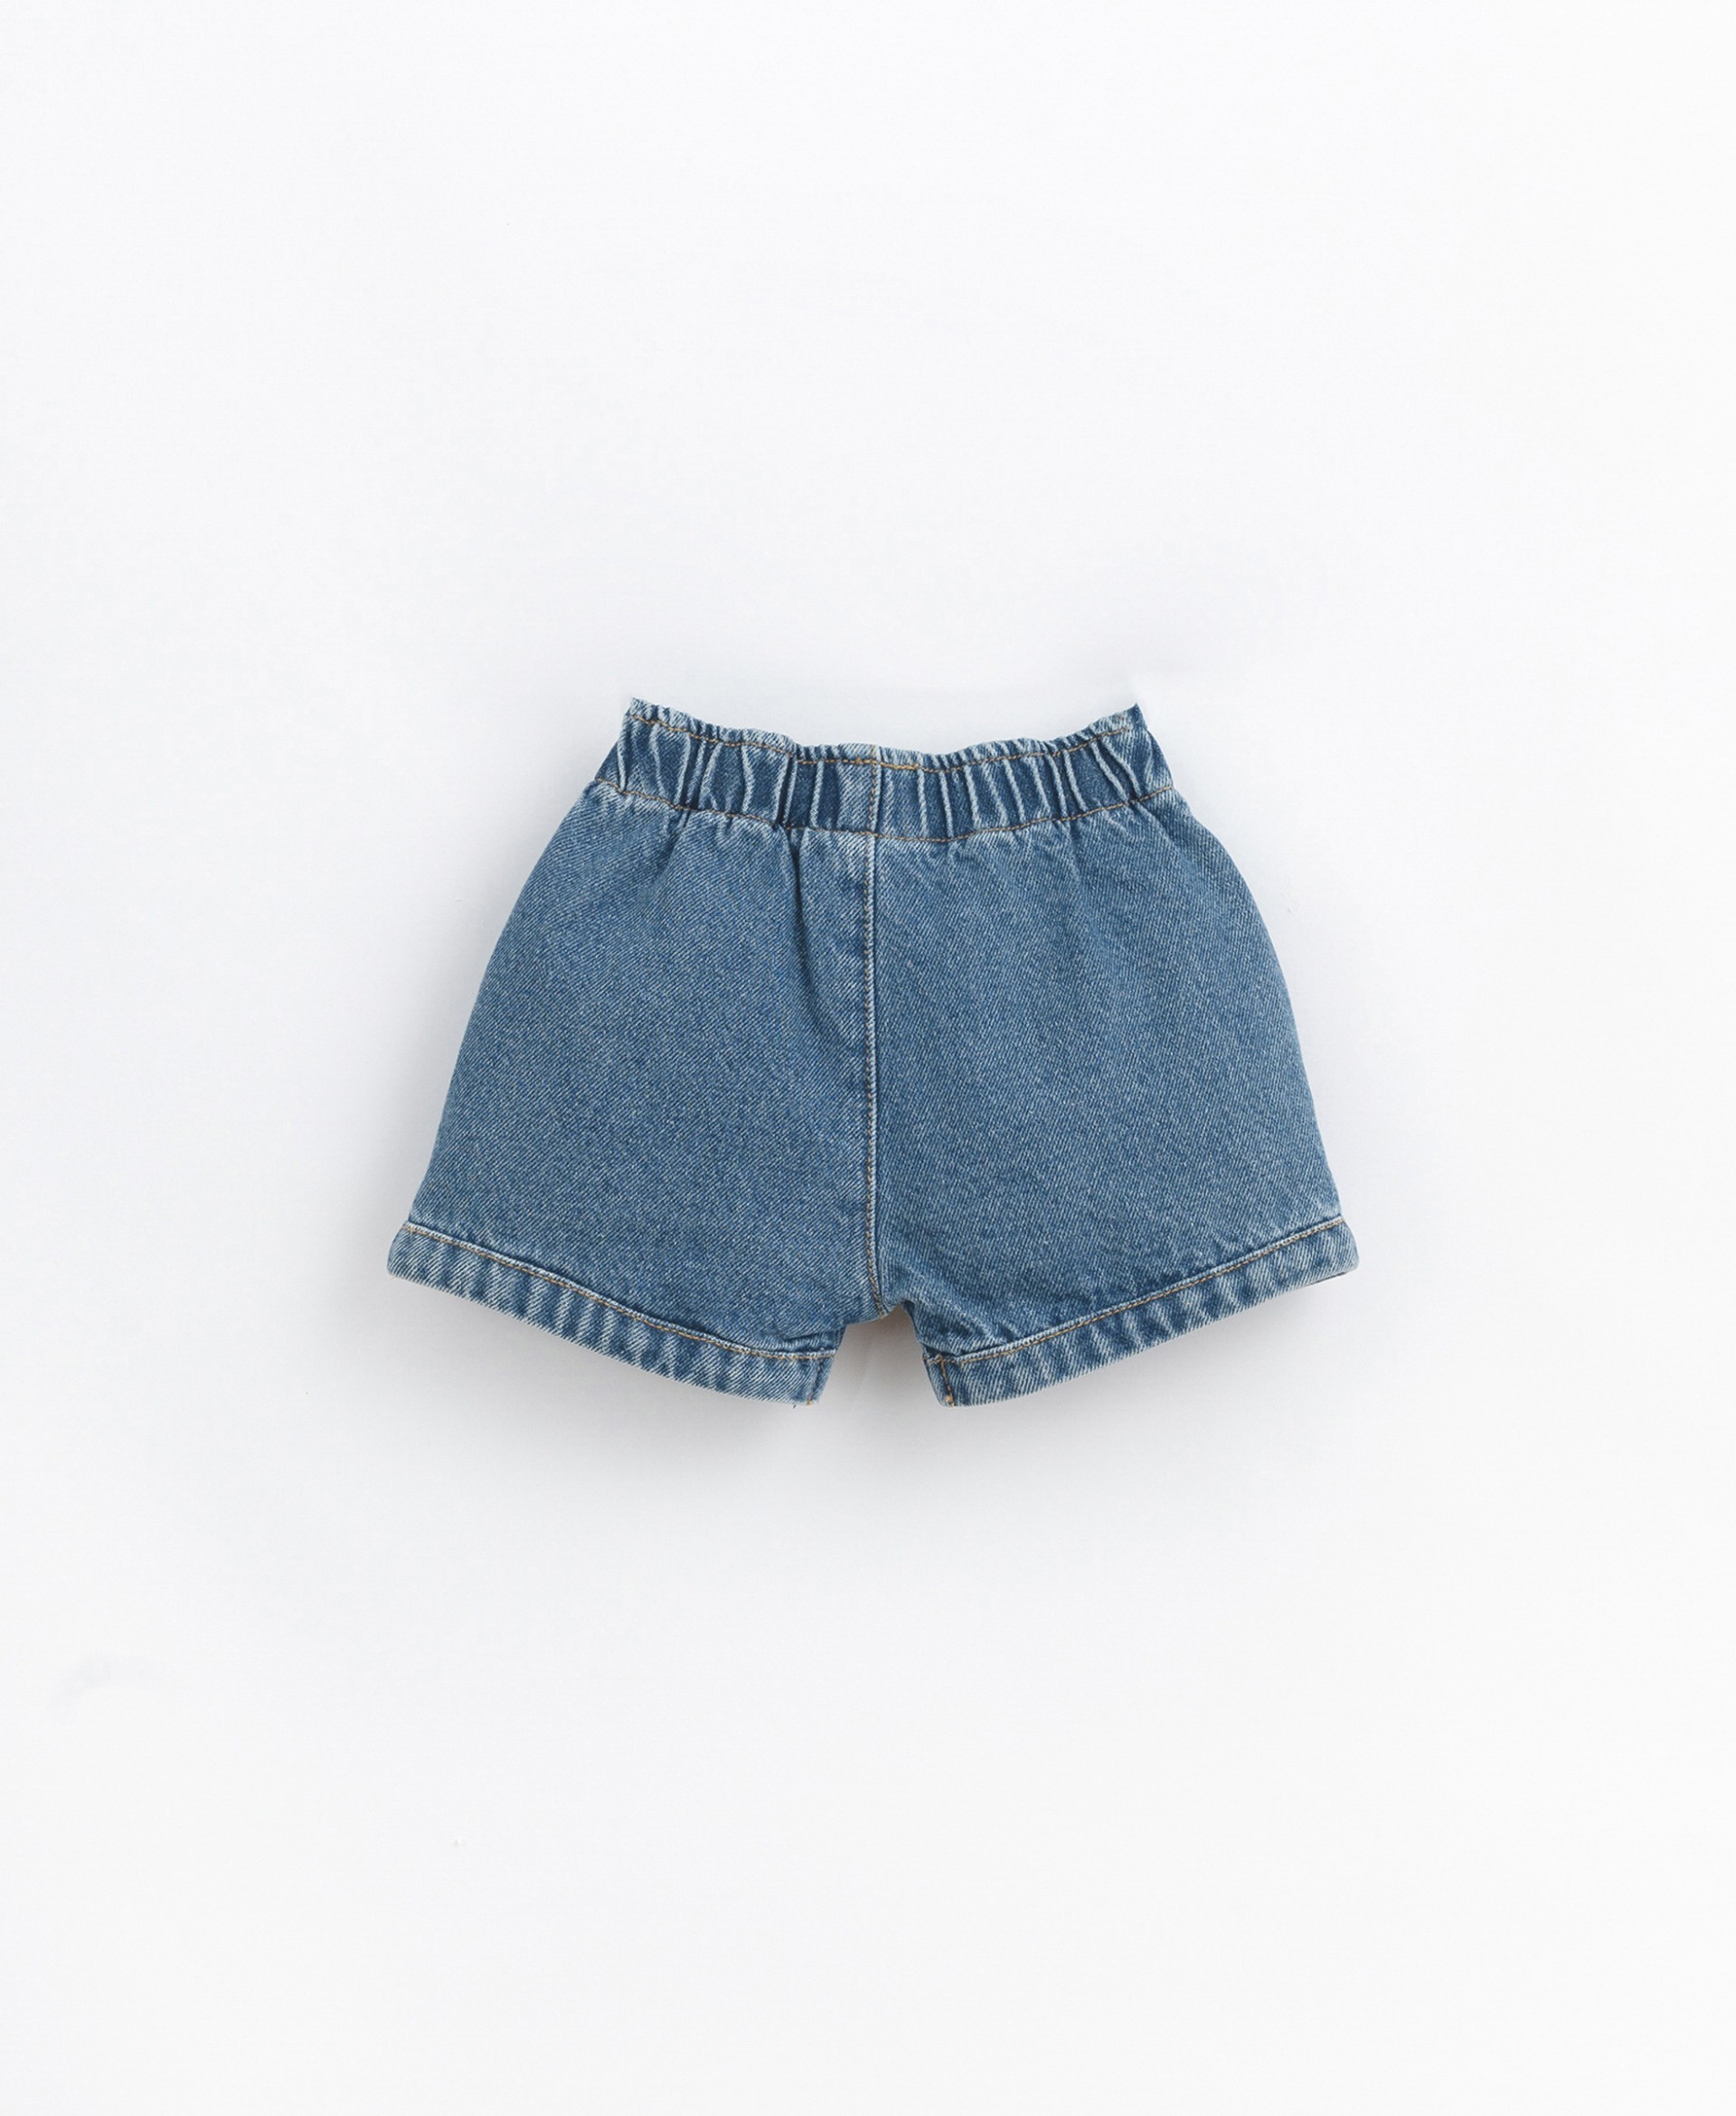 Shorts in cotton denim | Basketry